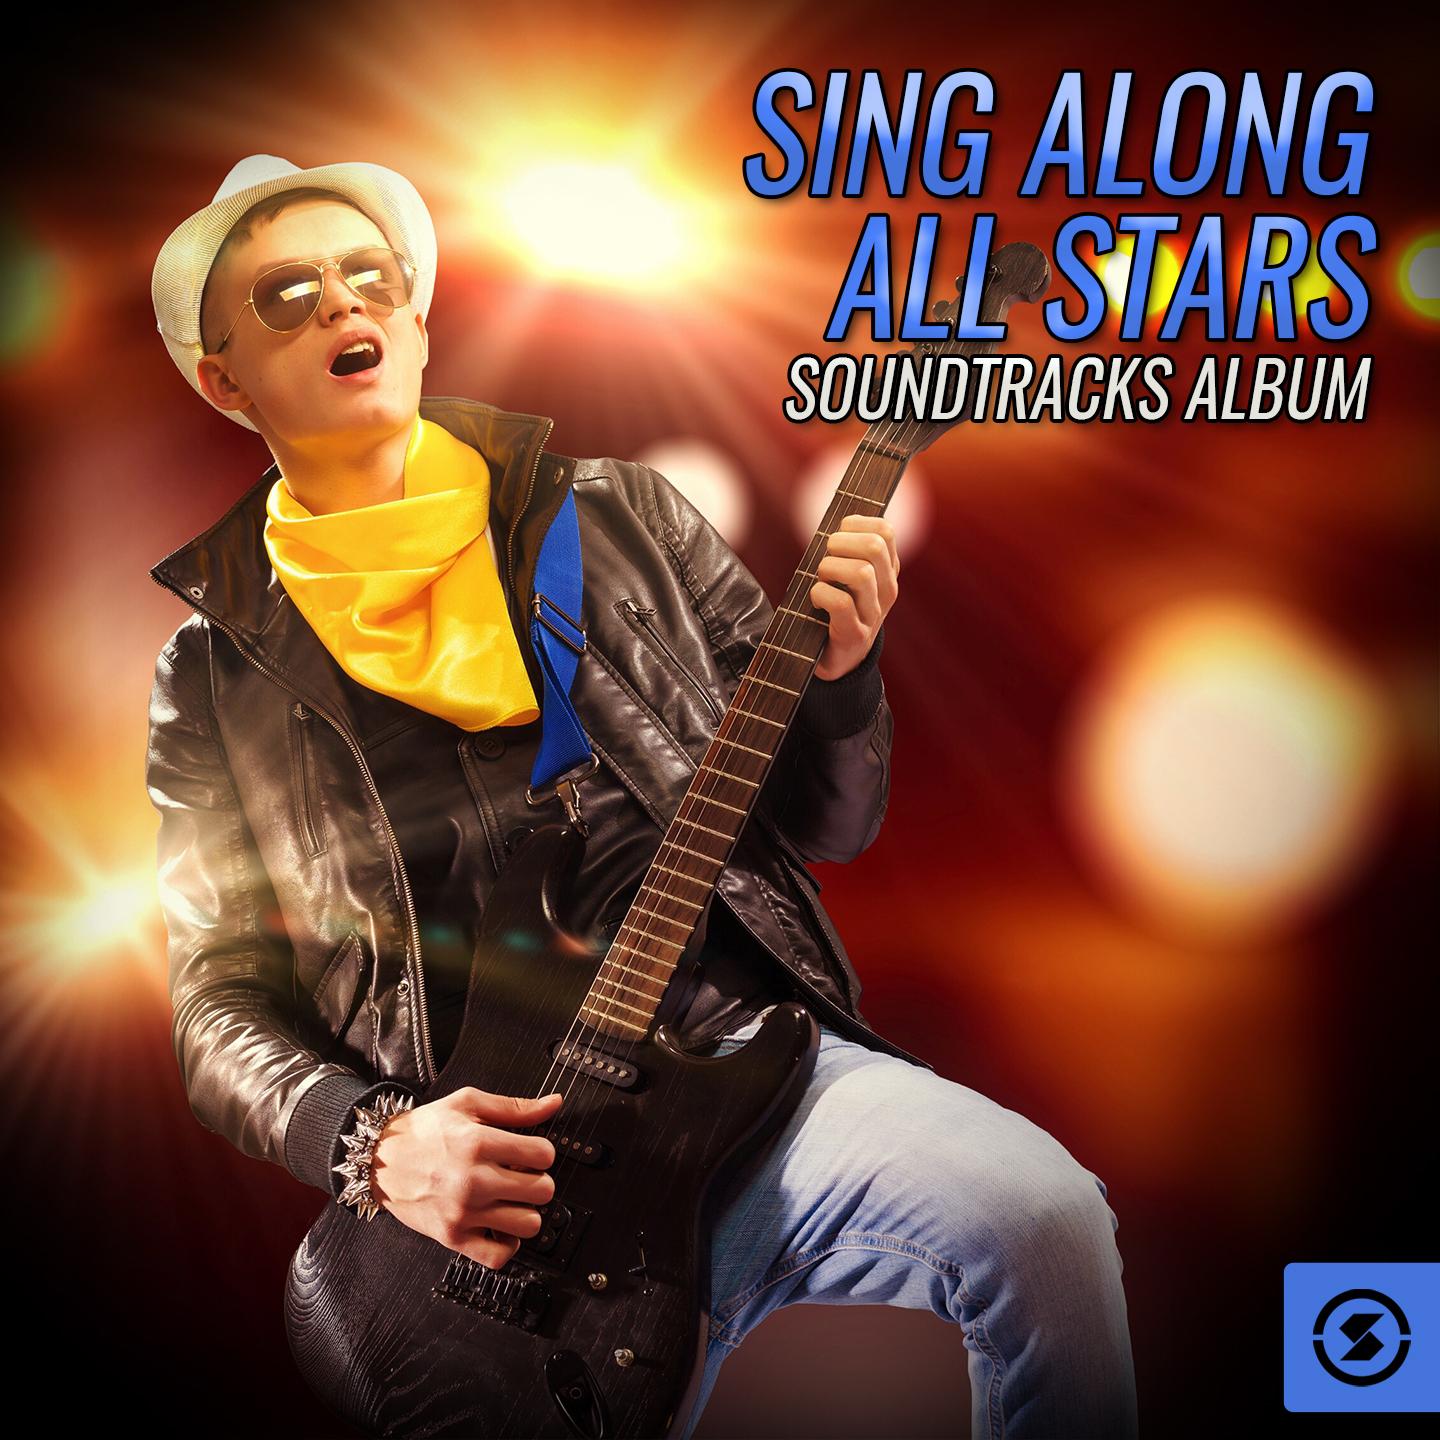 Sing Along All Stars Soundtracks Album